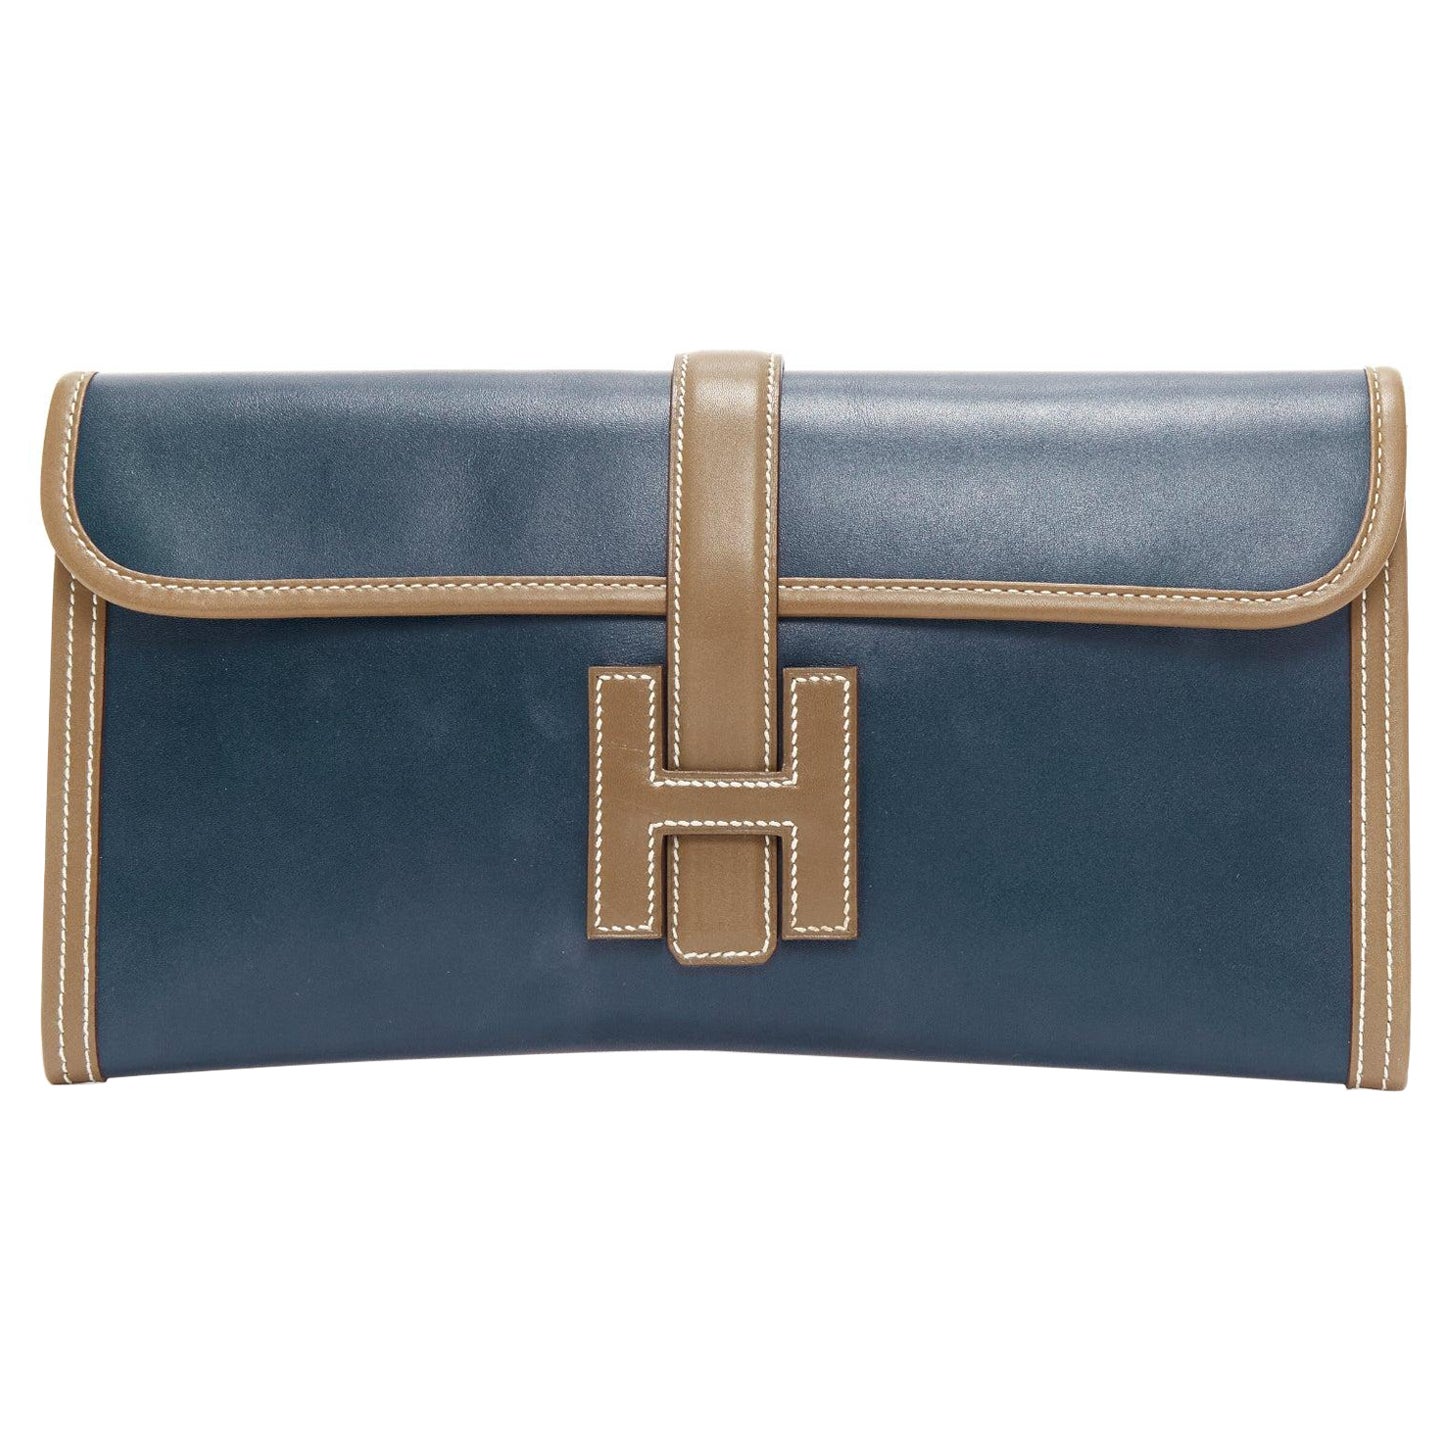 HERMES Jige Elan 29 blue taupe H logo swift leather loop through clutch bag